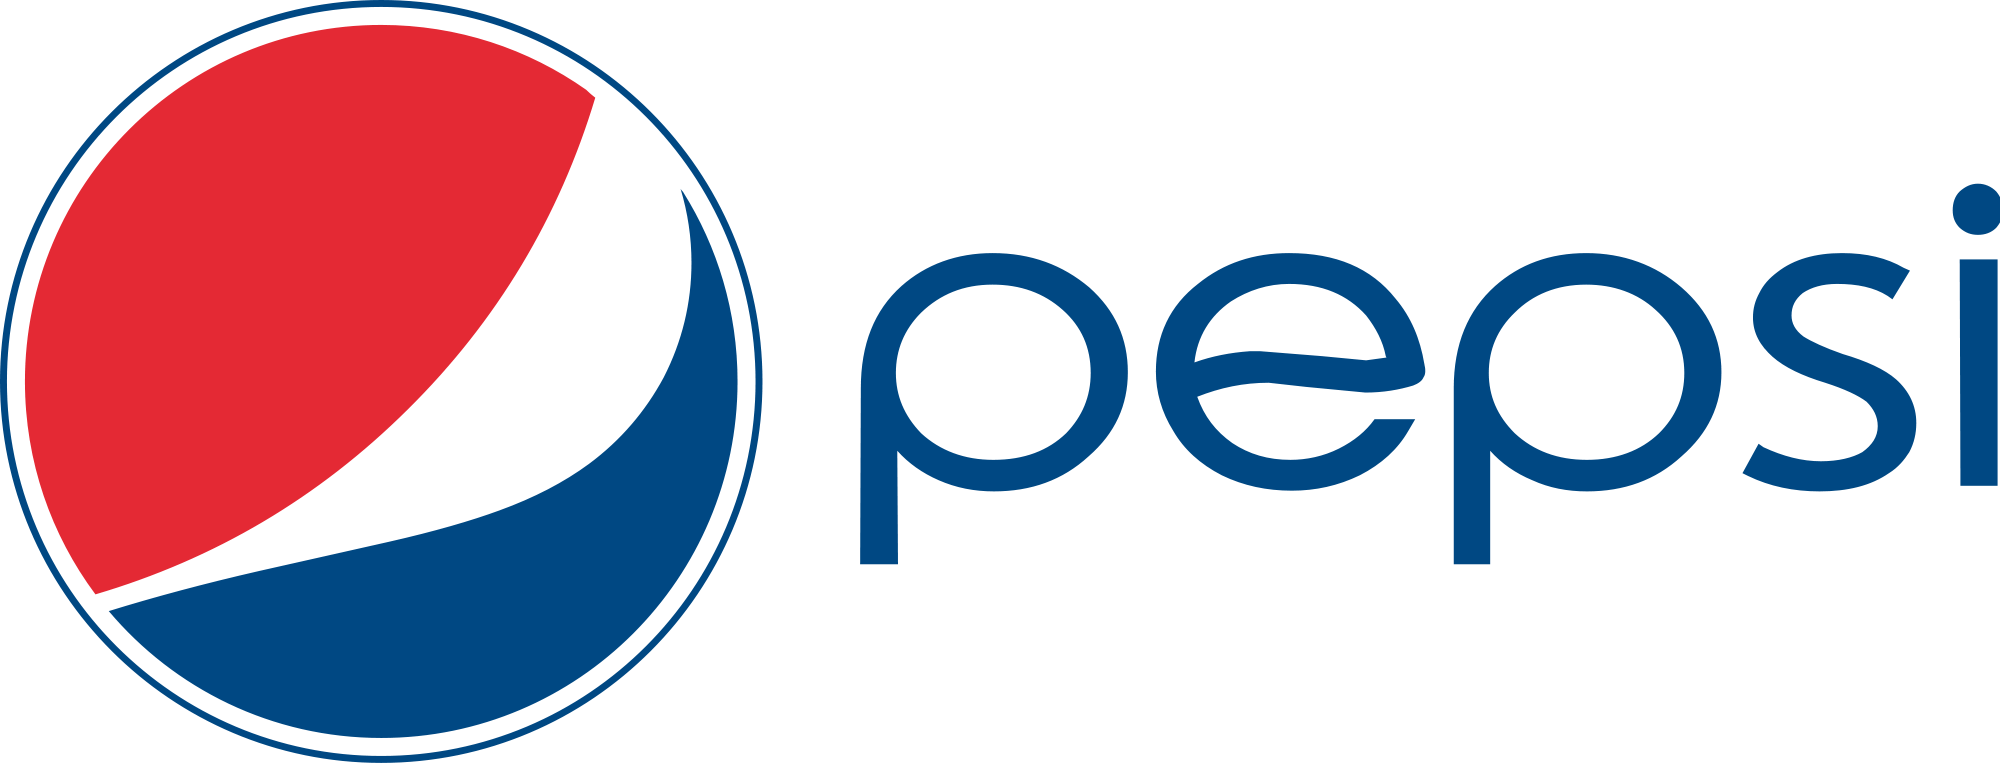 Image result for pepsi logo.png